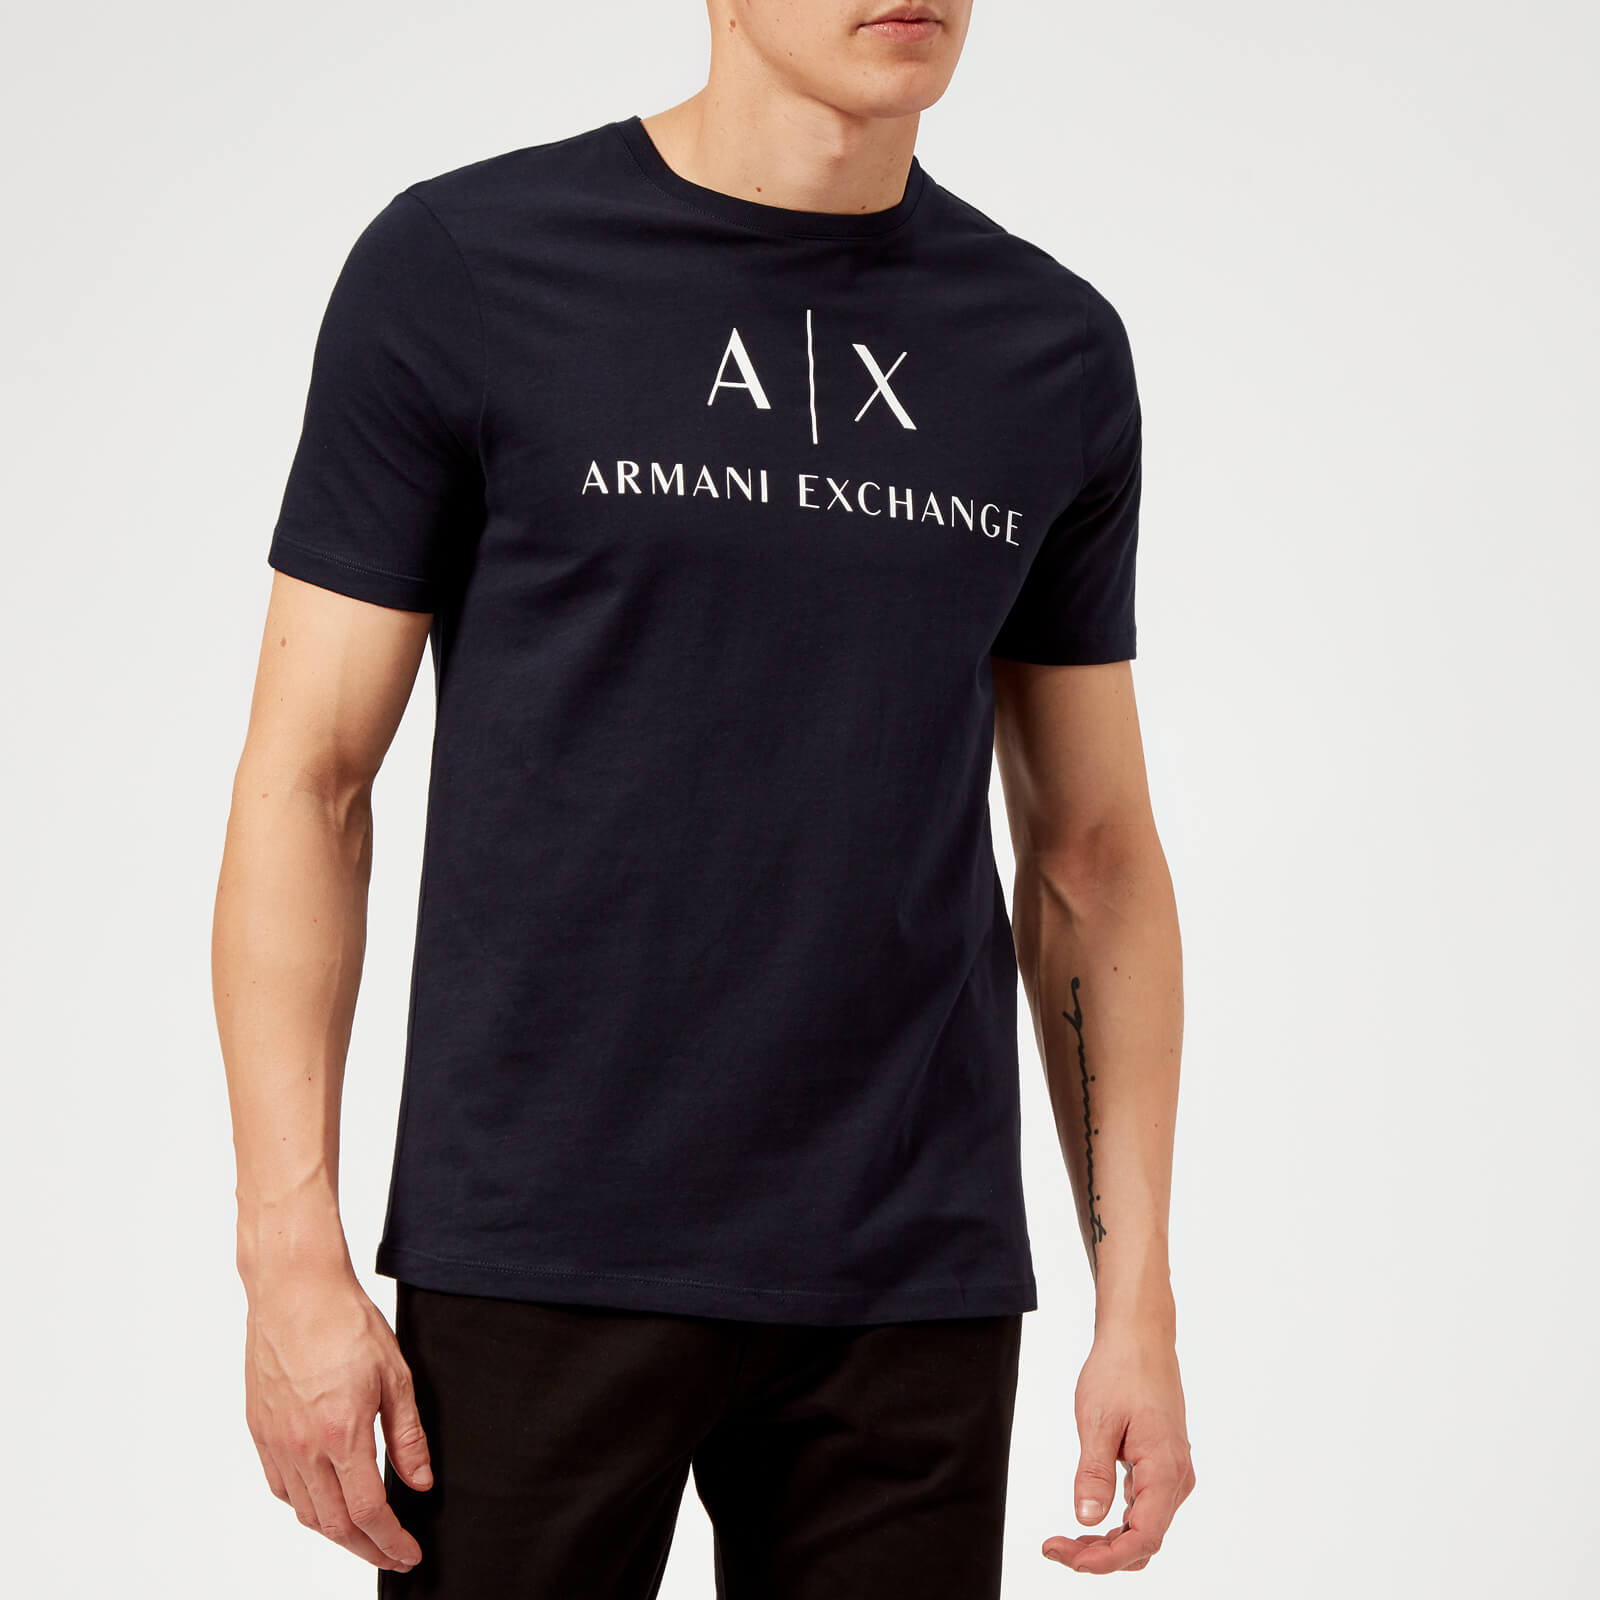 ax clothes armani exchange